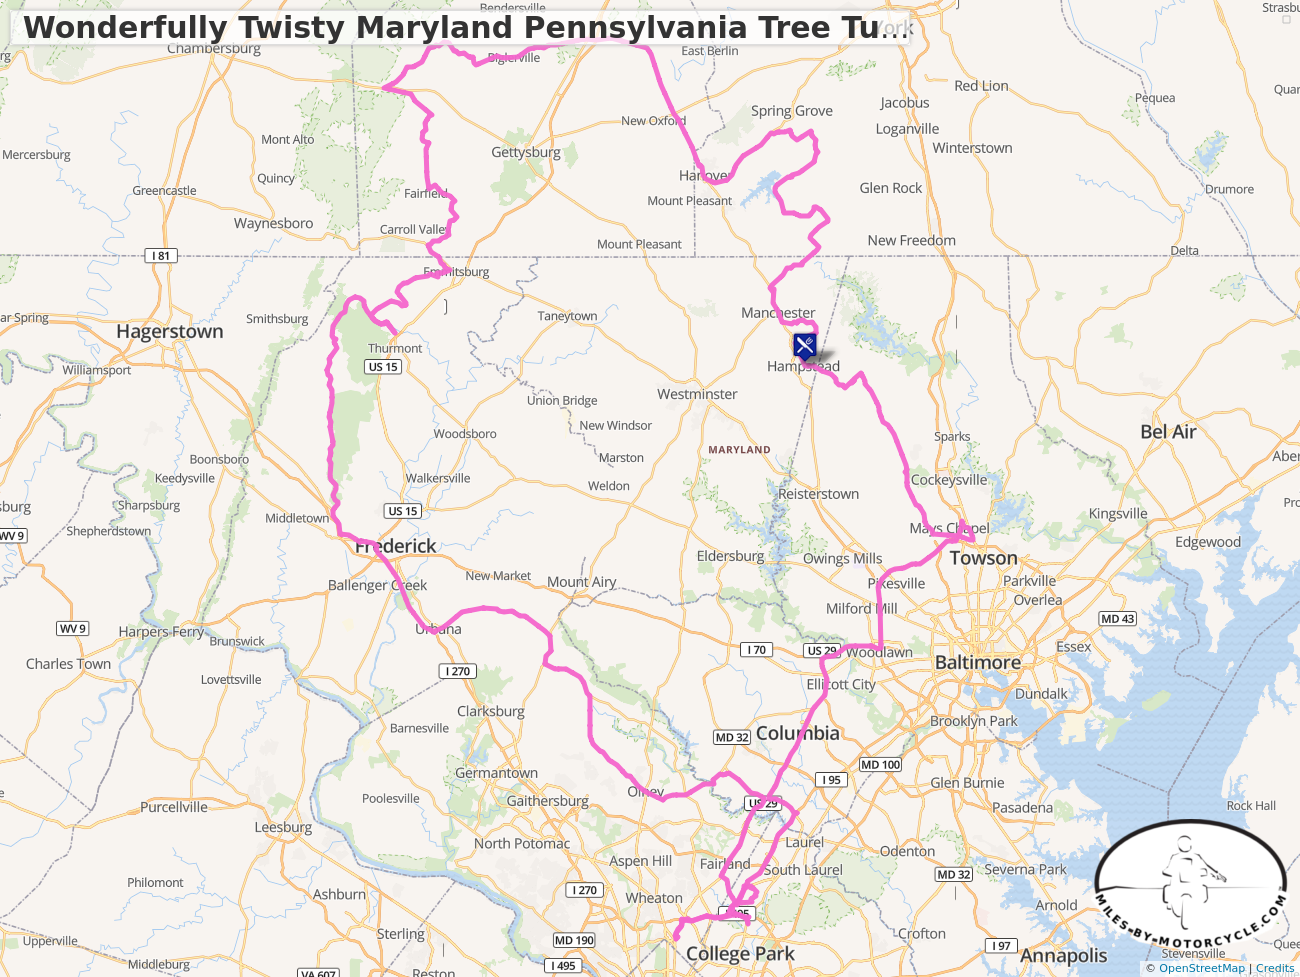 Wonderfully Twisty Maryland Pennsylvania Tree Tunnel Ride